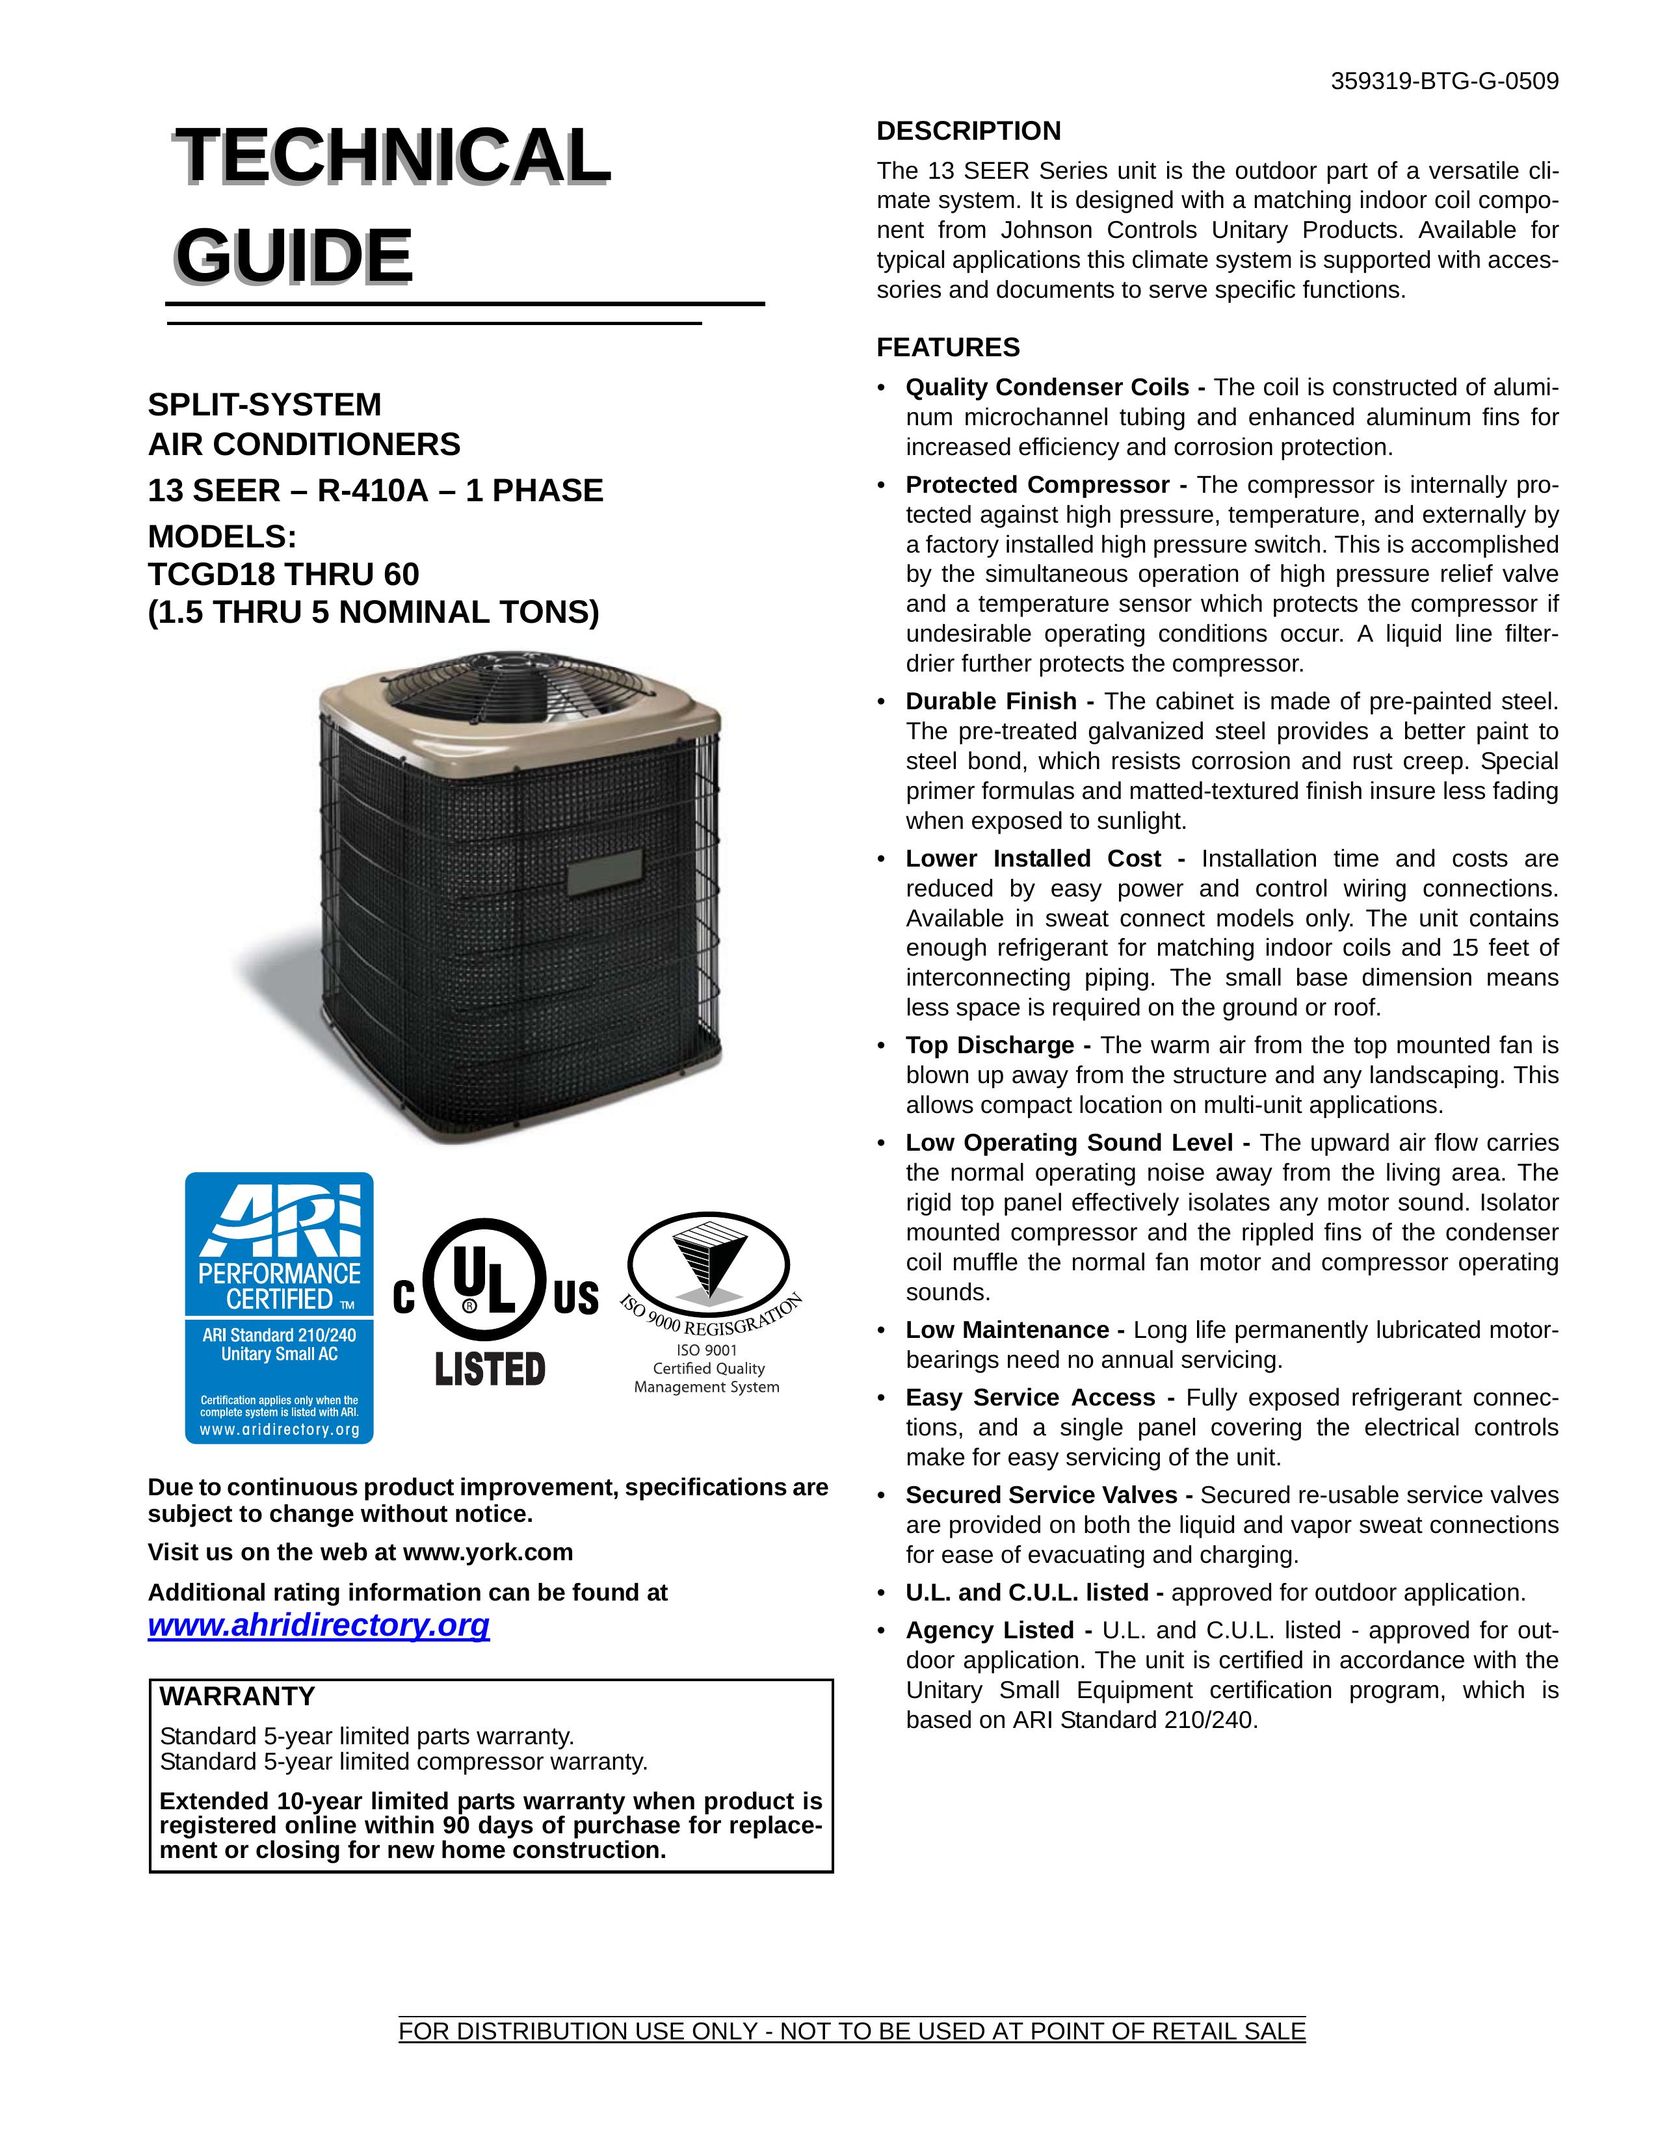 Johnson Controls TCGD18 THRU 60 Air Conditioner User Manual